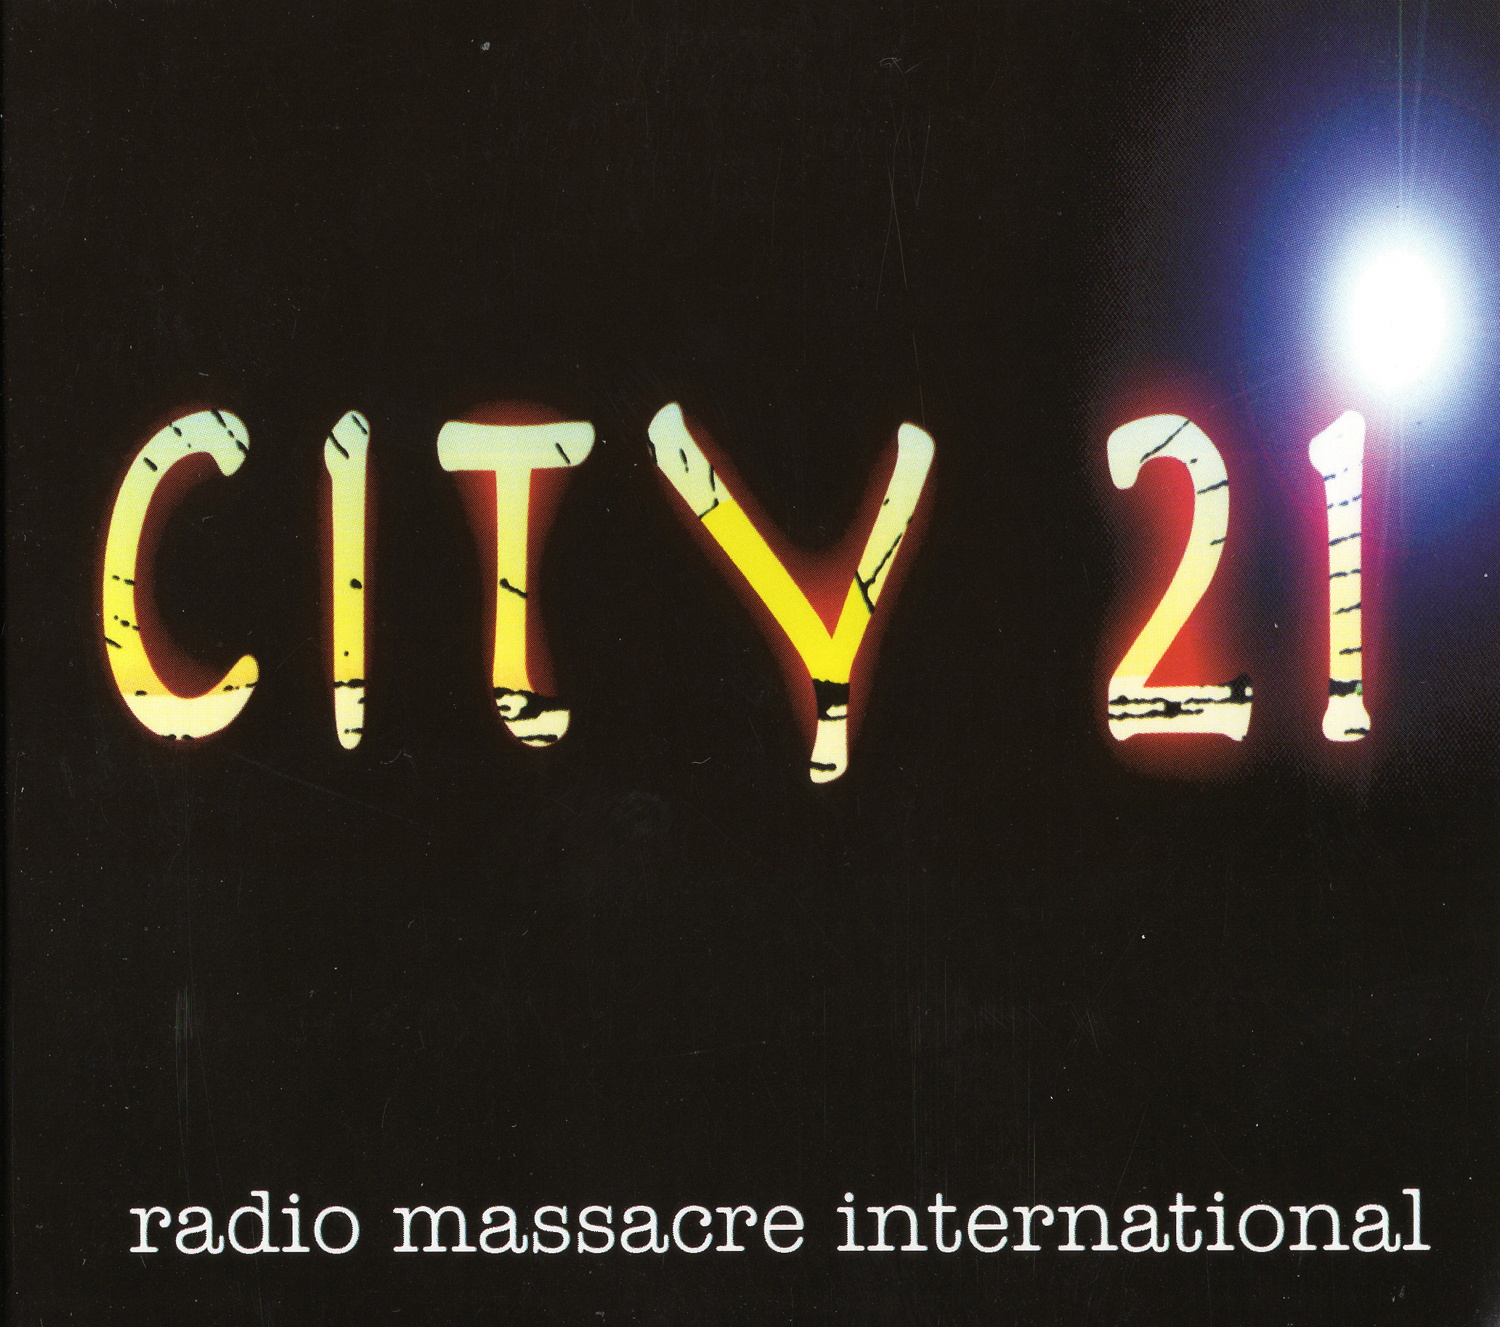 city 21